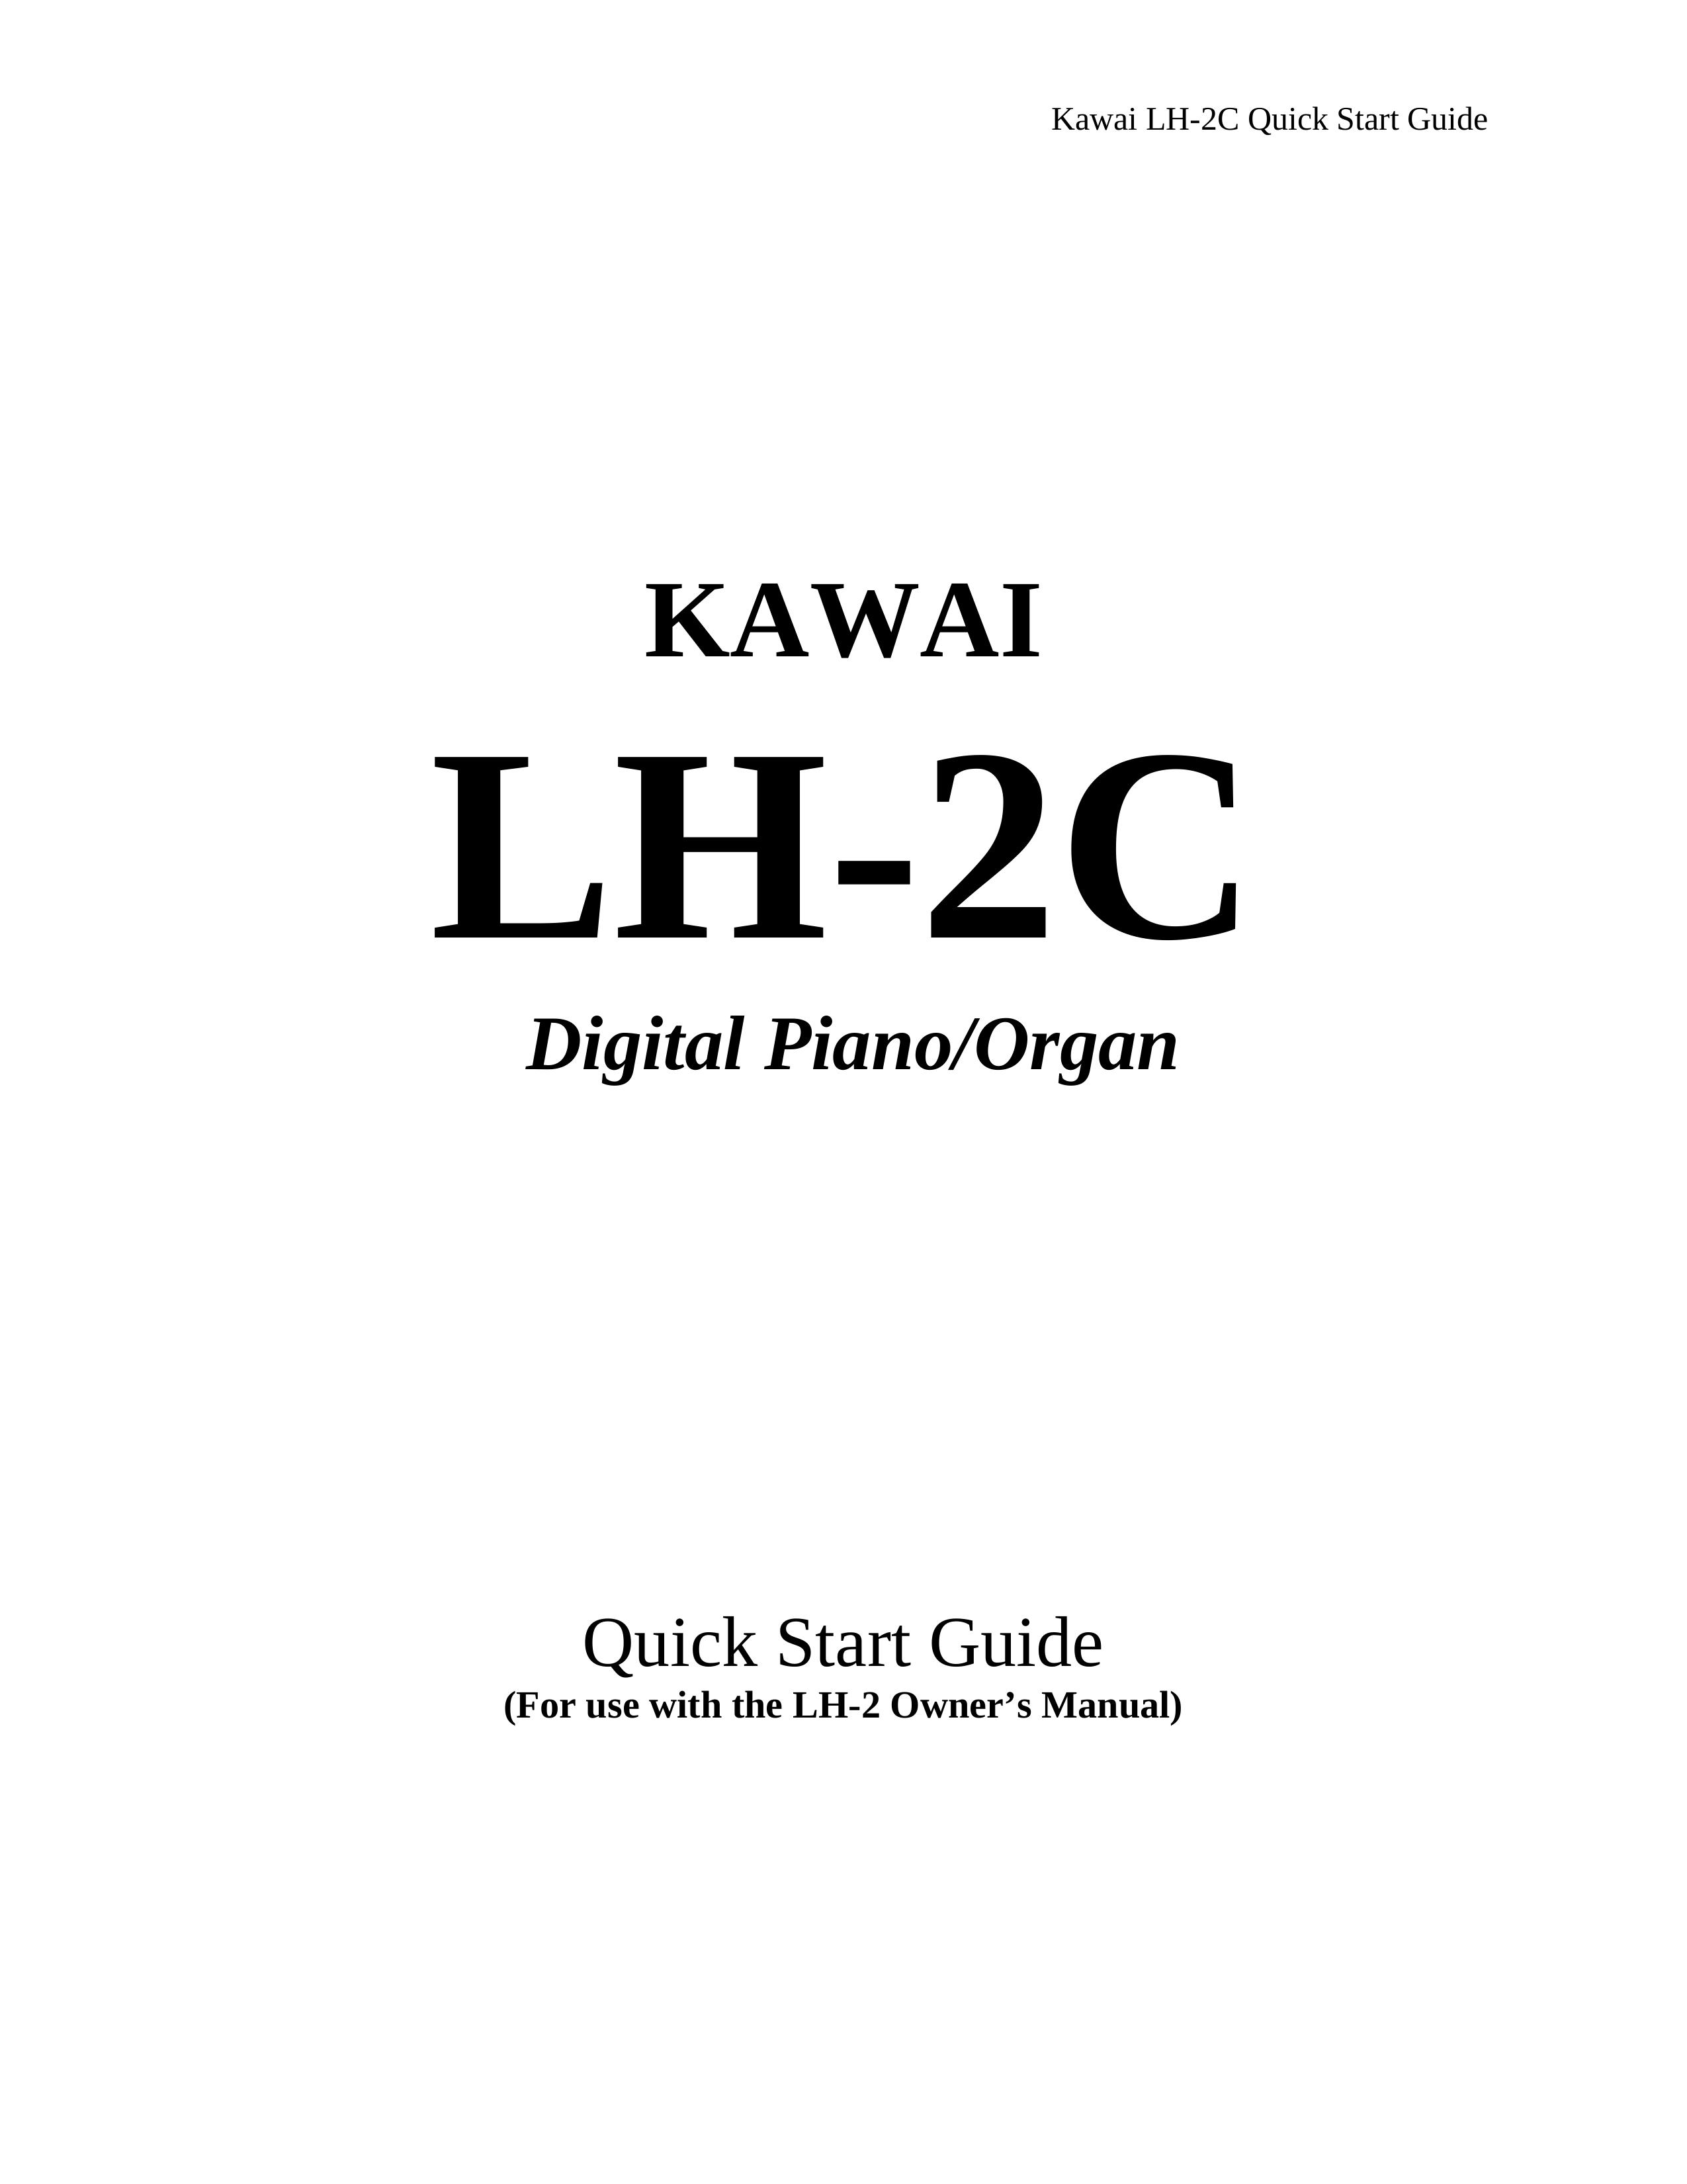 Kawai LH-2C Electronic Keyboard User Manual